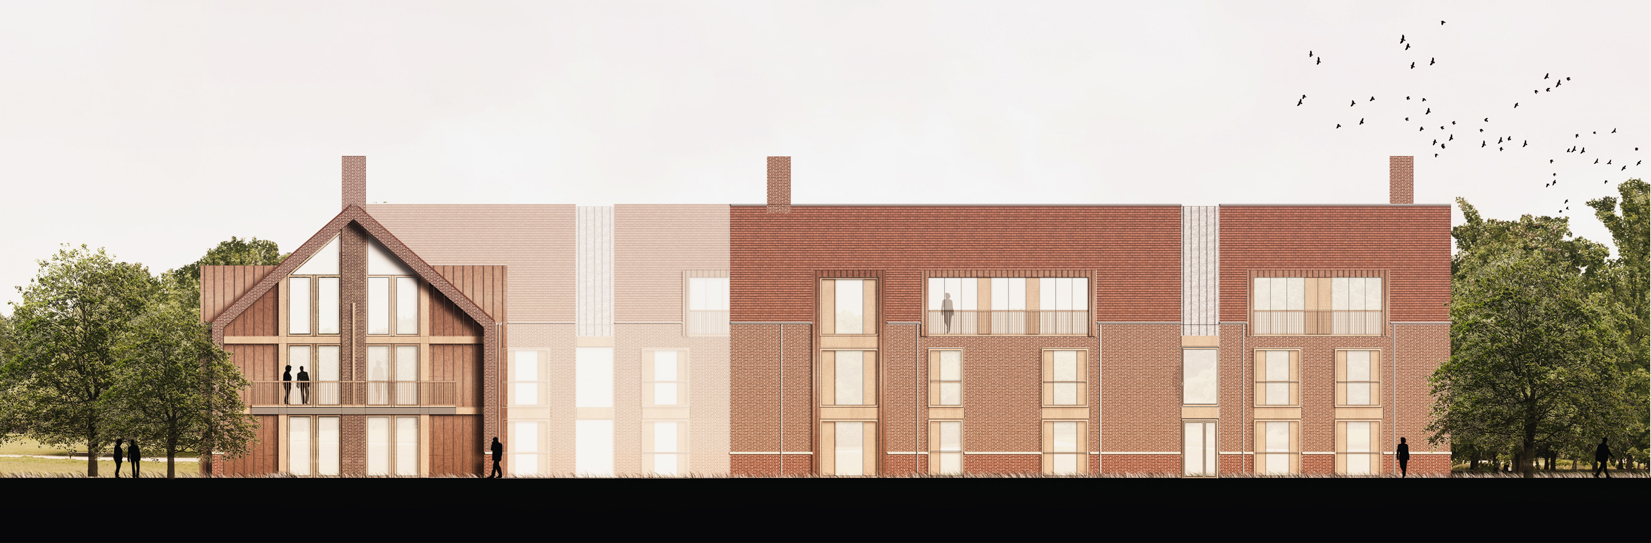 Plus-Architecture-Stoke-Court-Elevation